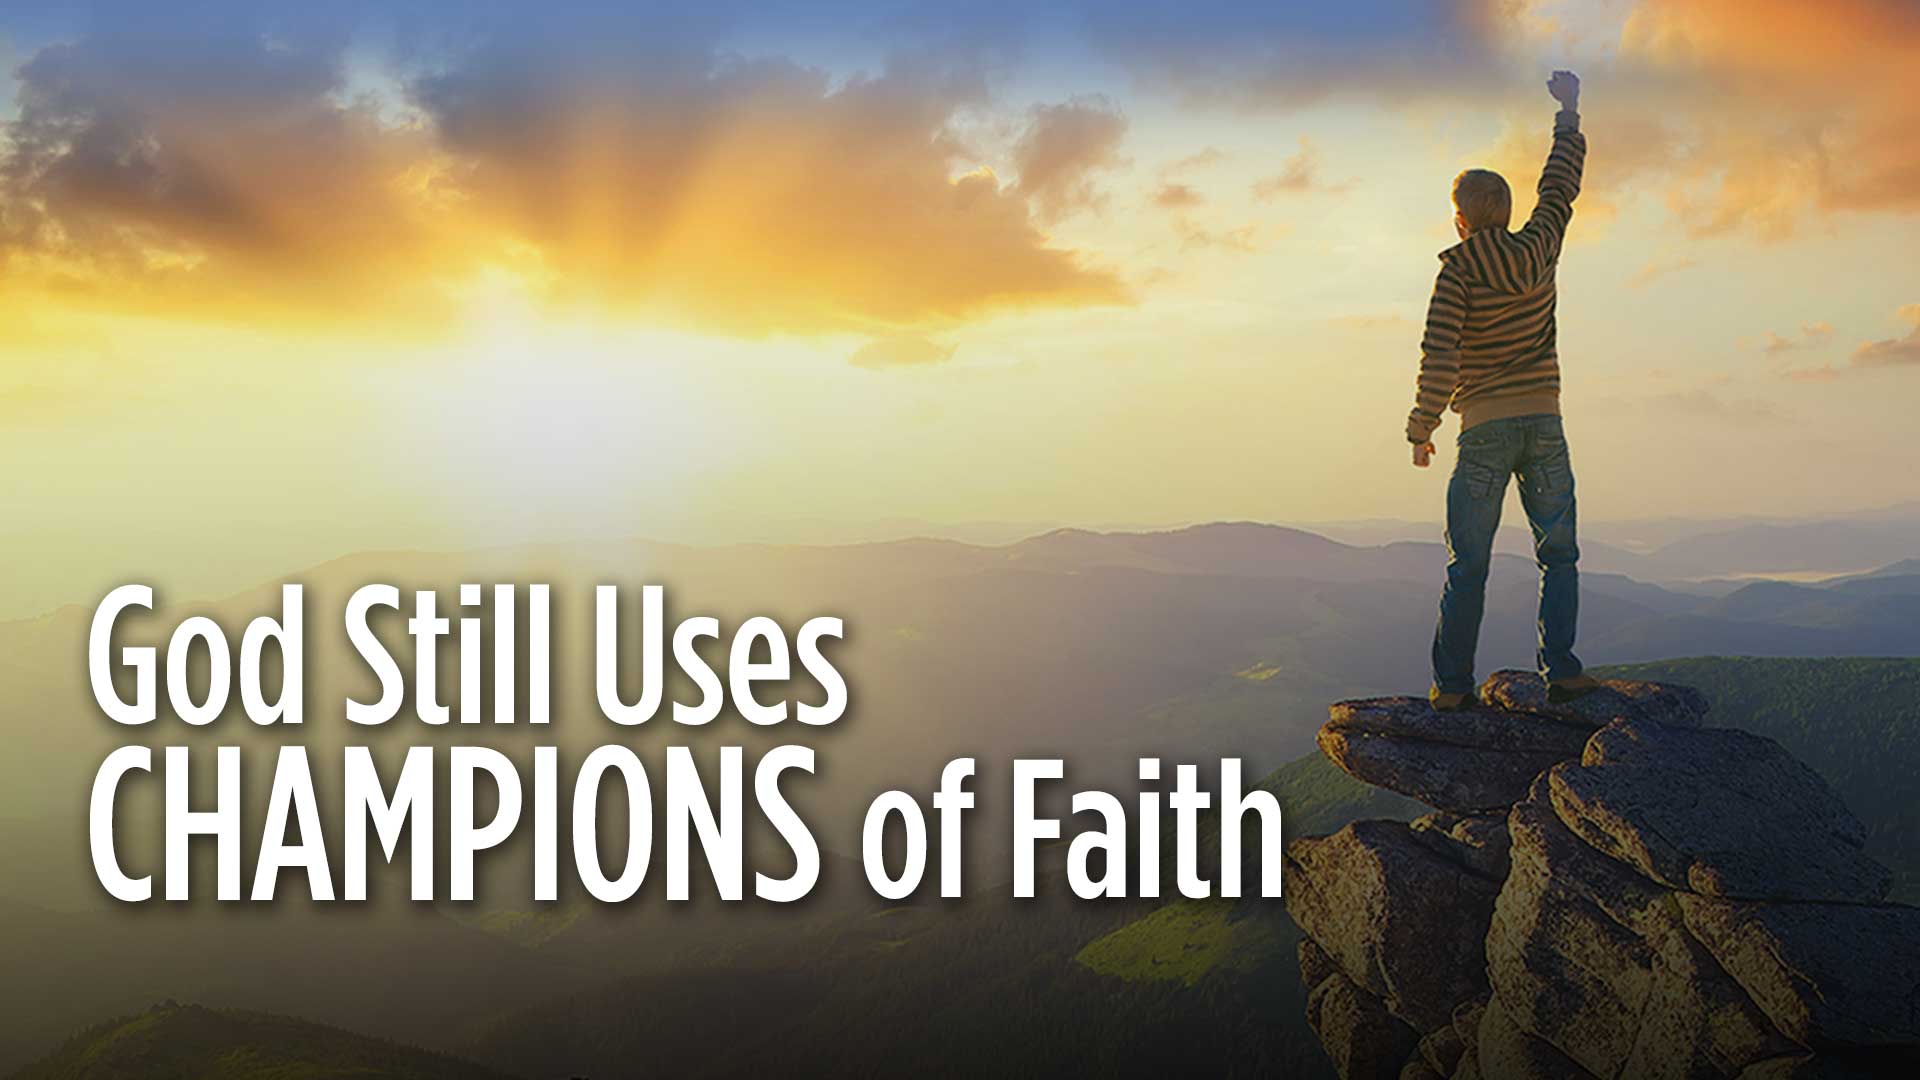 God Still Uses Champions of Faith 1920x1080